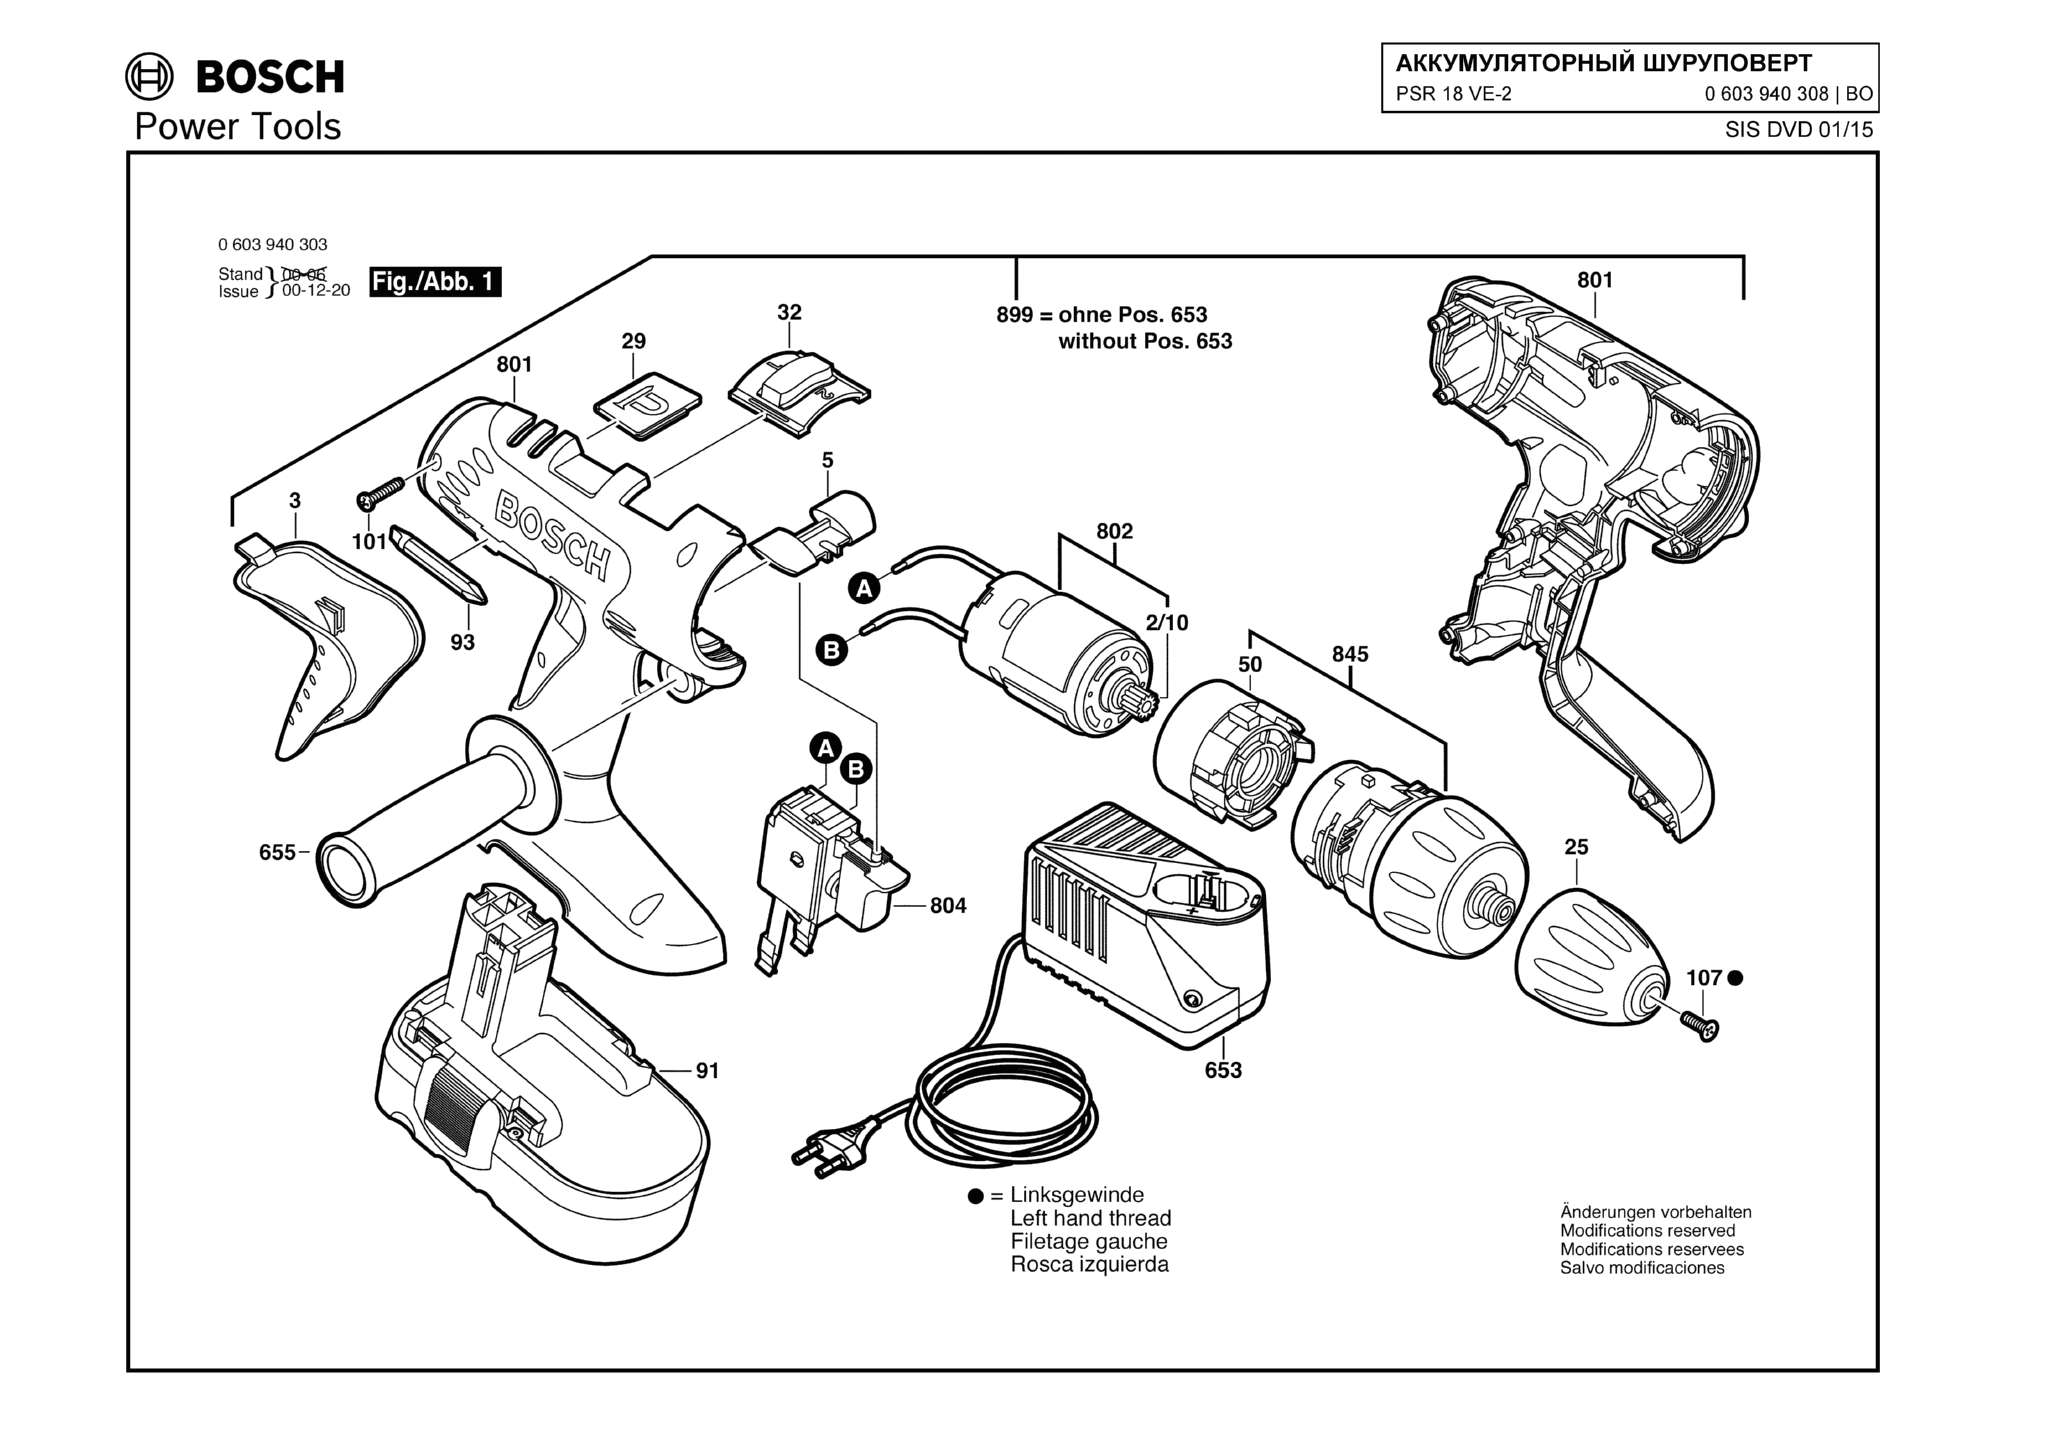 Запчасти, схема и деталировка Bosch PSR 18 VE-2 (ТИП 0603940308)